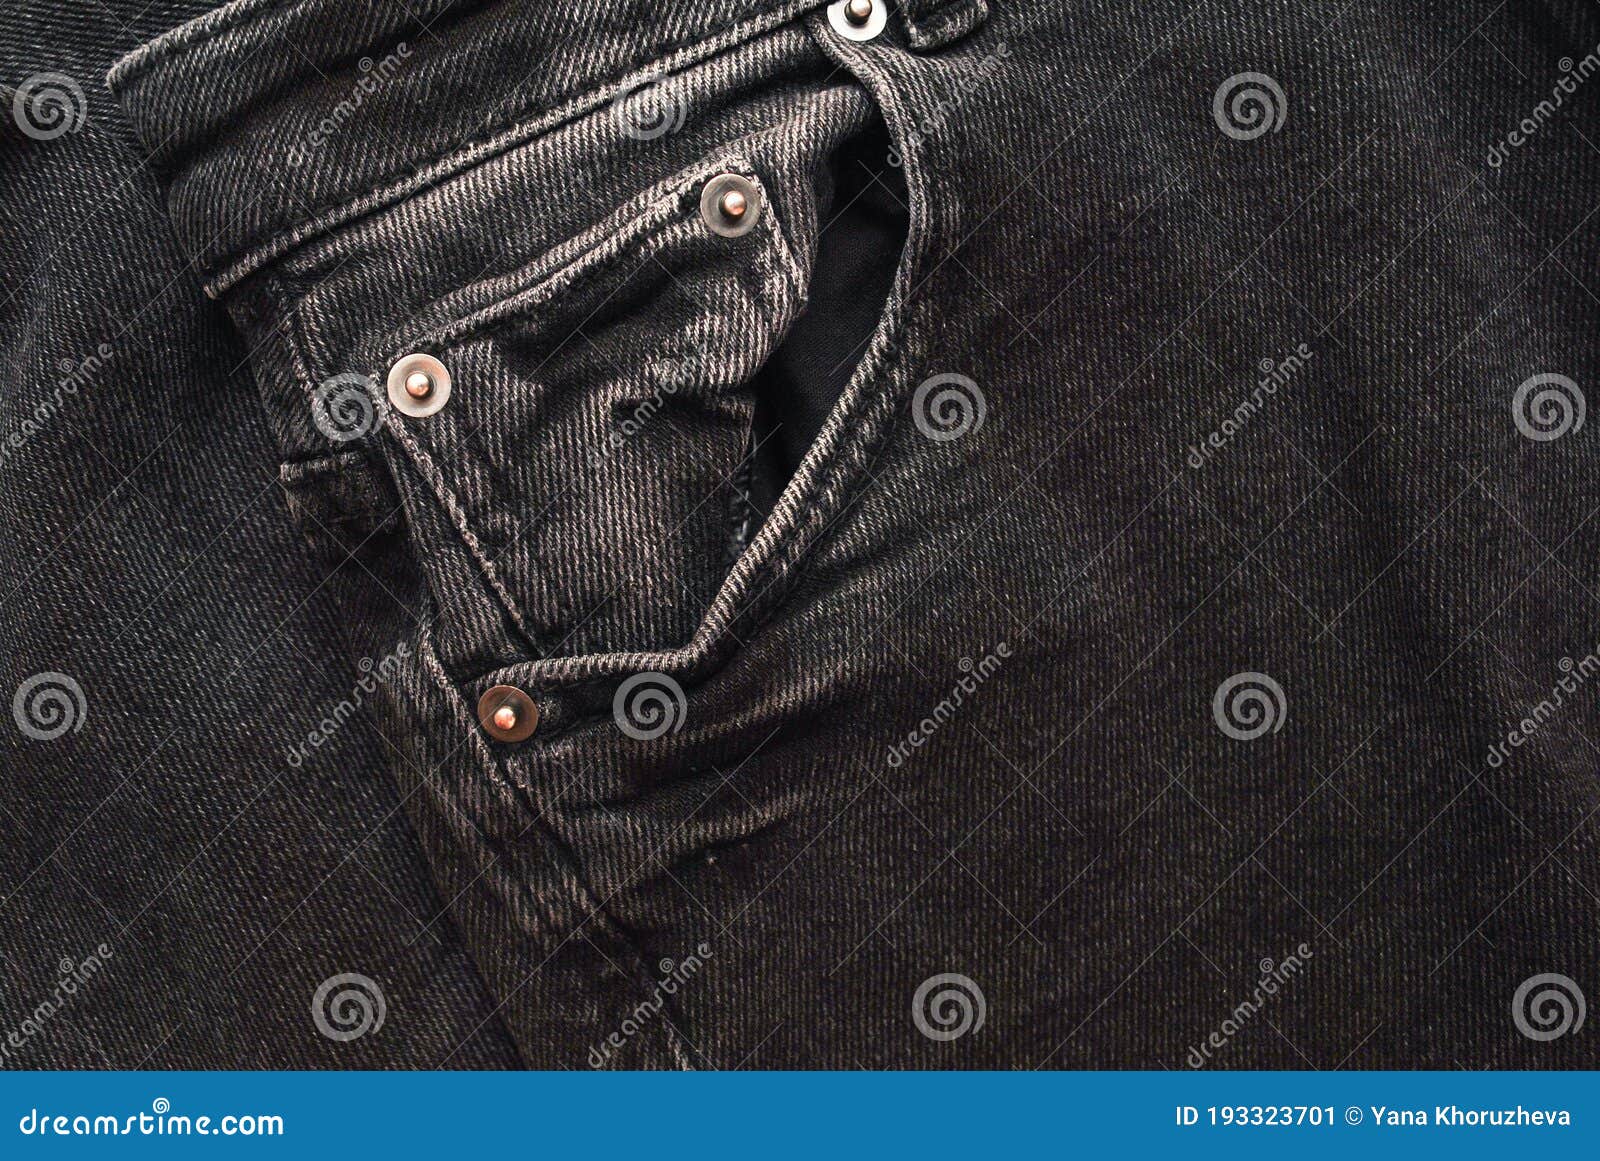 Denim. Jeans Background. Denim Jeans Texture or Denim Jeans Background ...